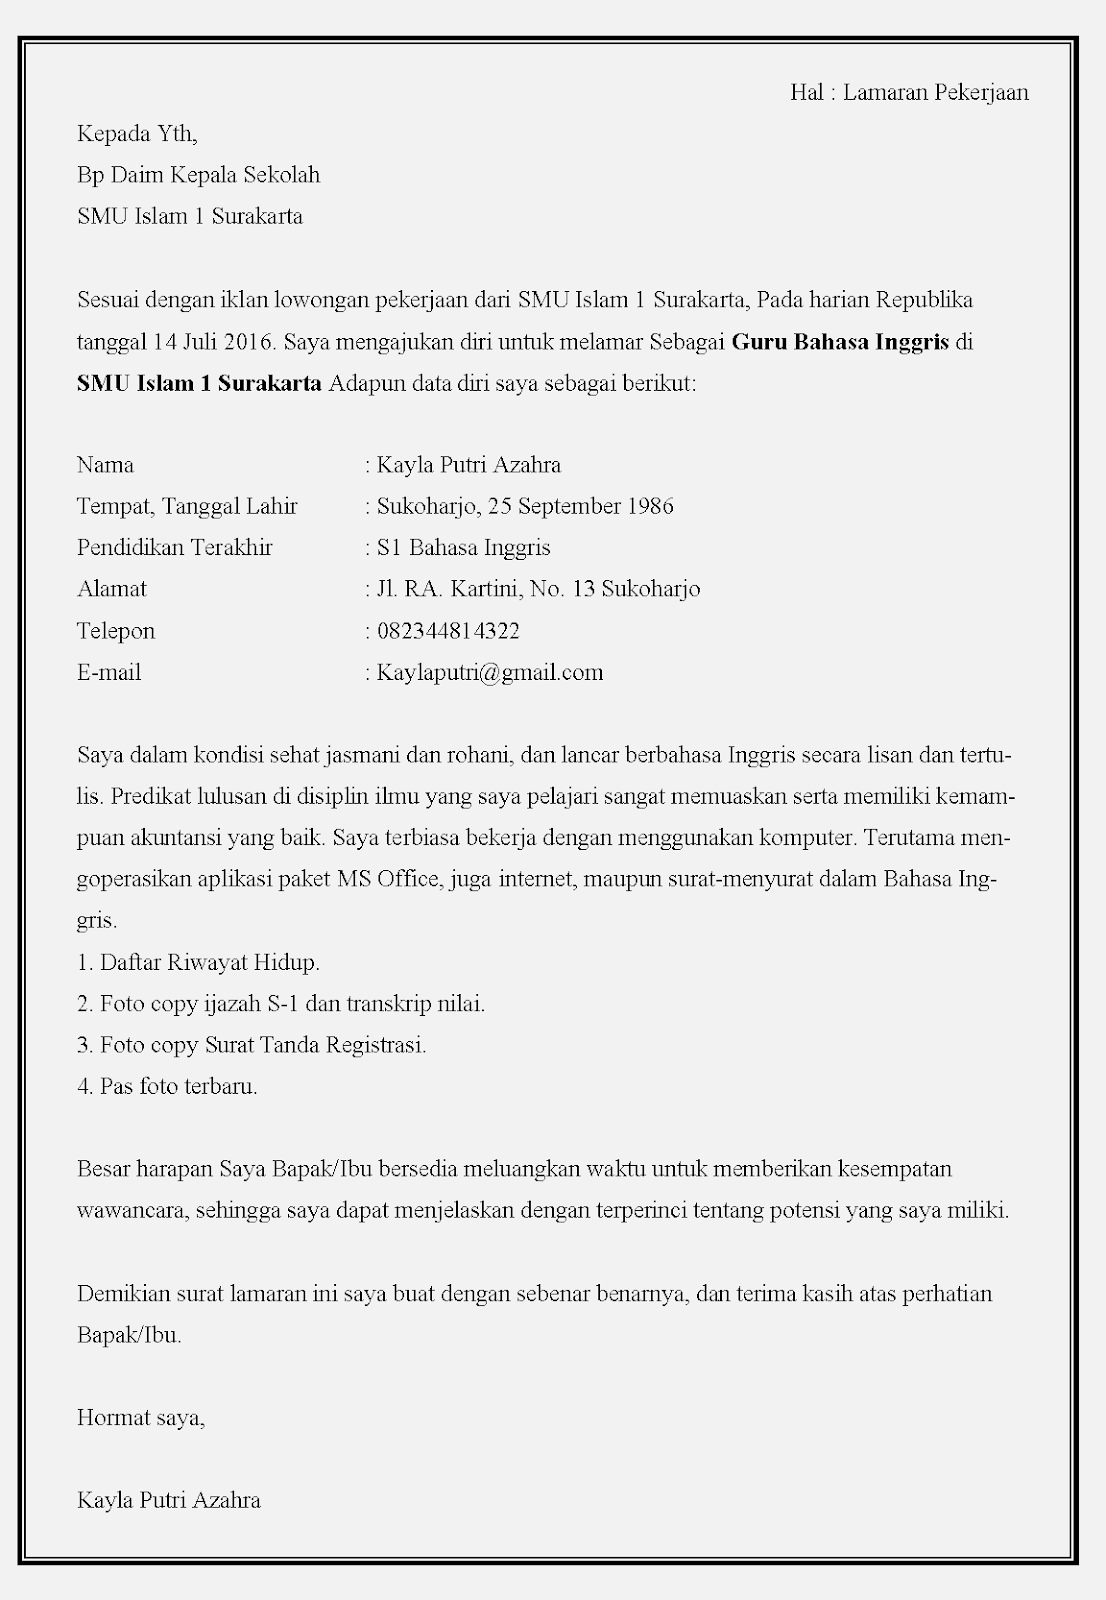 Contoh surat lamaran kerja guru bahasa inggris dalam bahasa indonesia